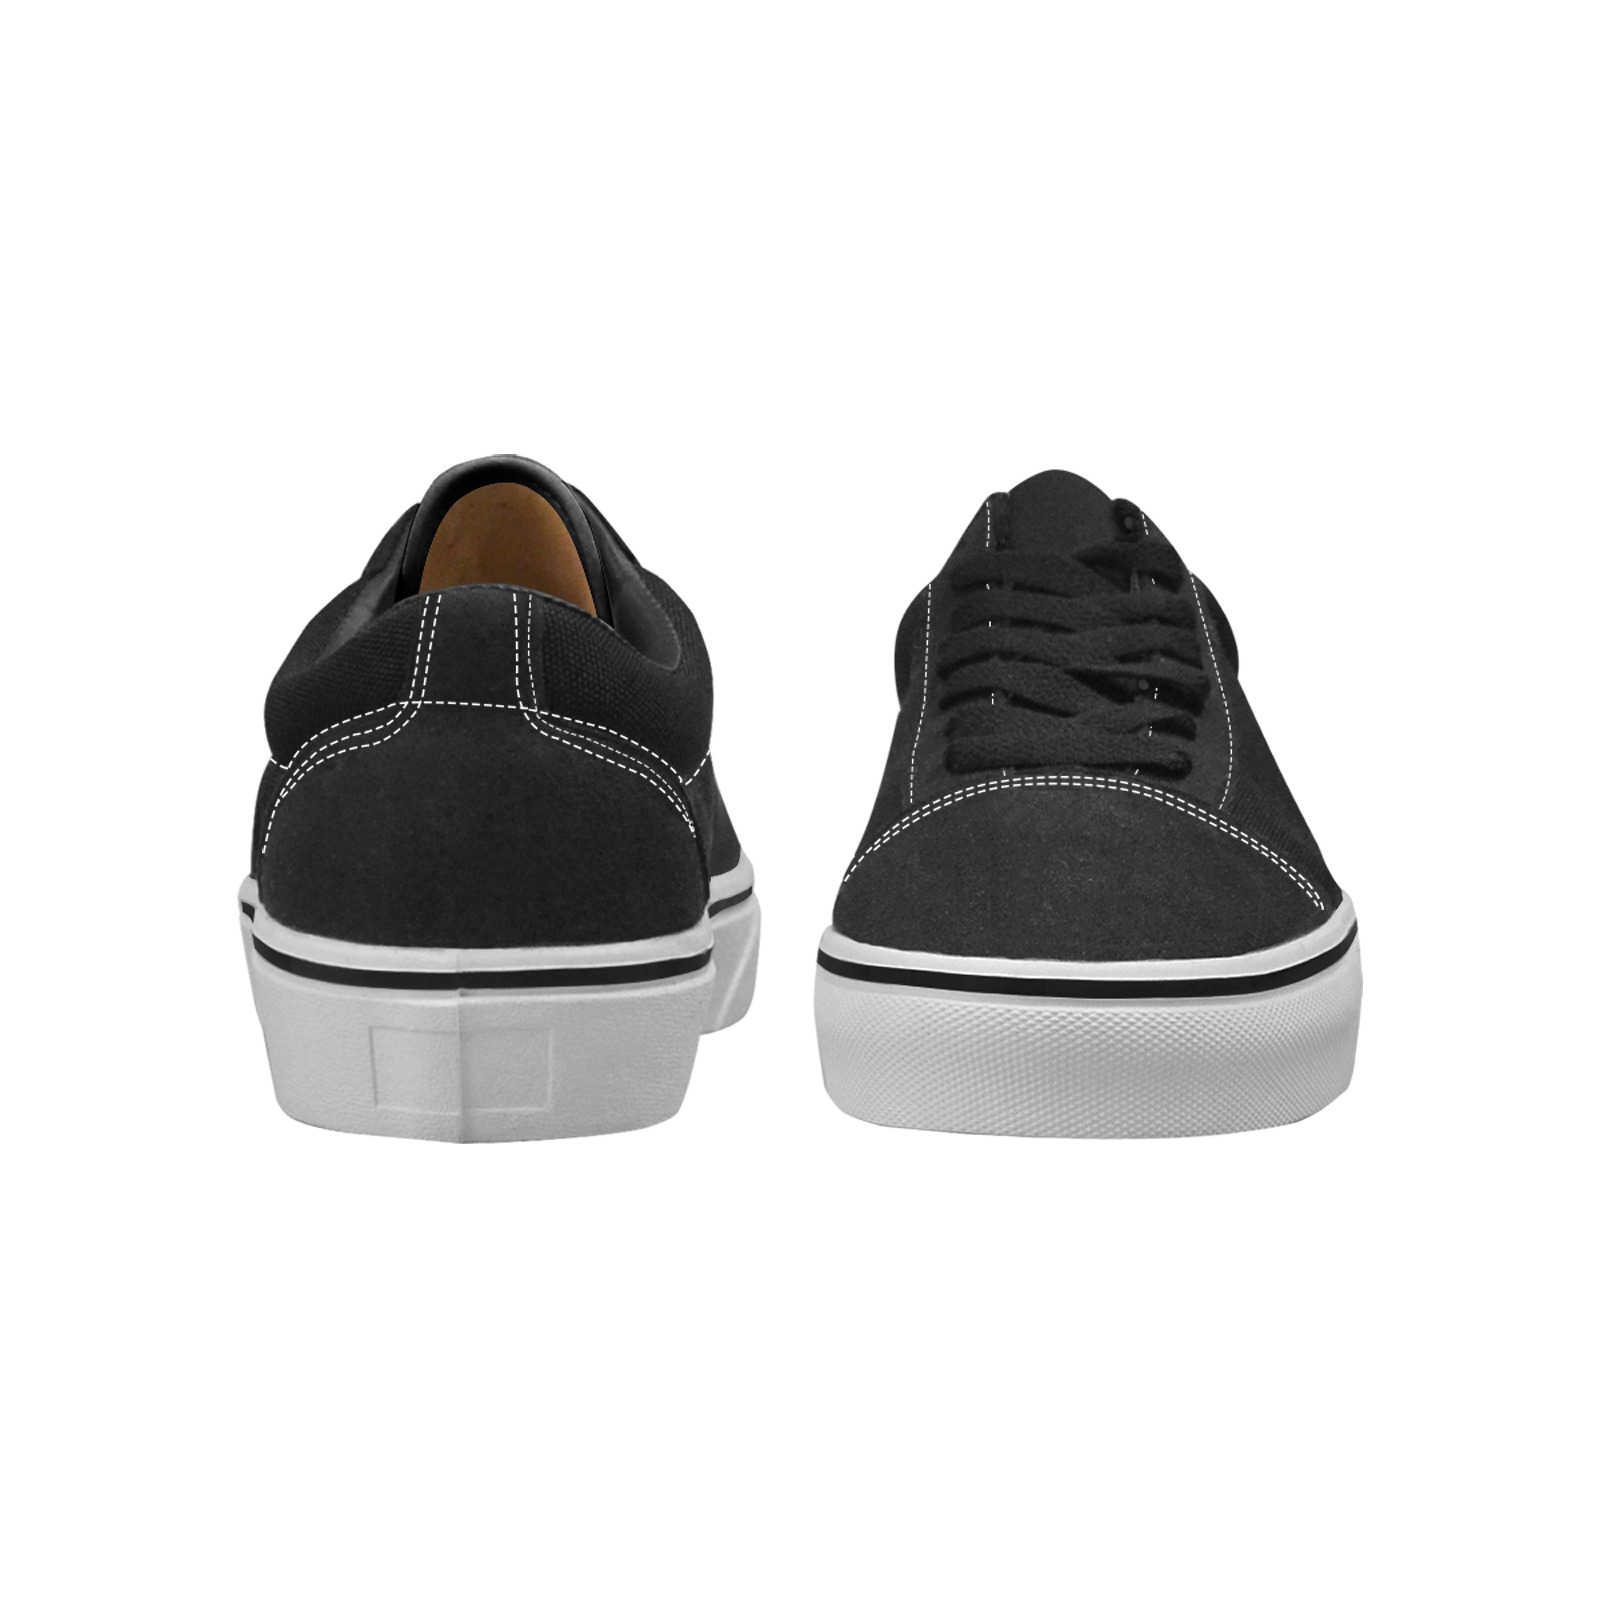 color black Men's Low Top Skateboarding Shoes (Model E001-2)